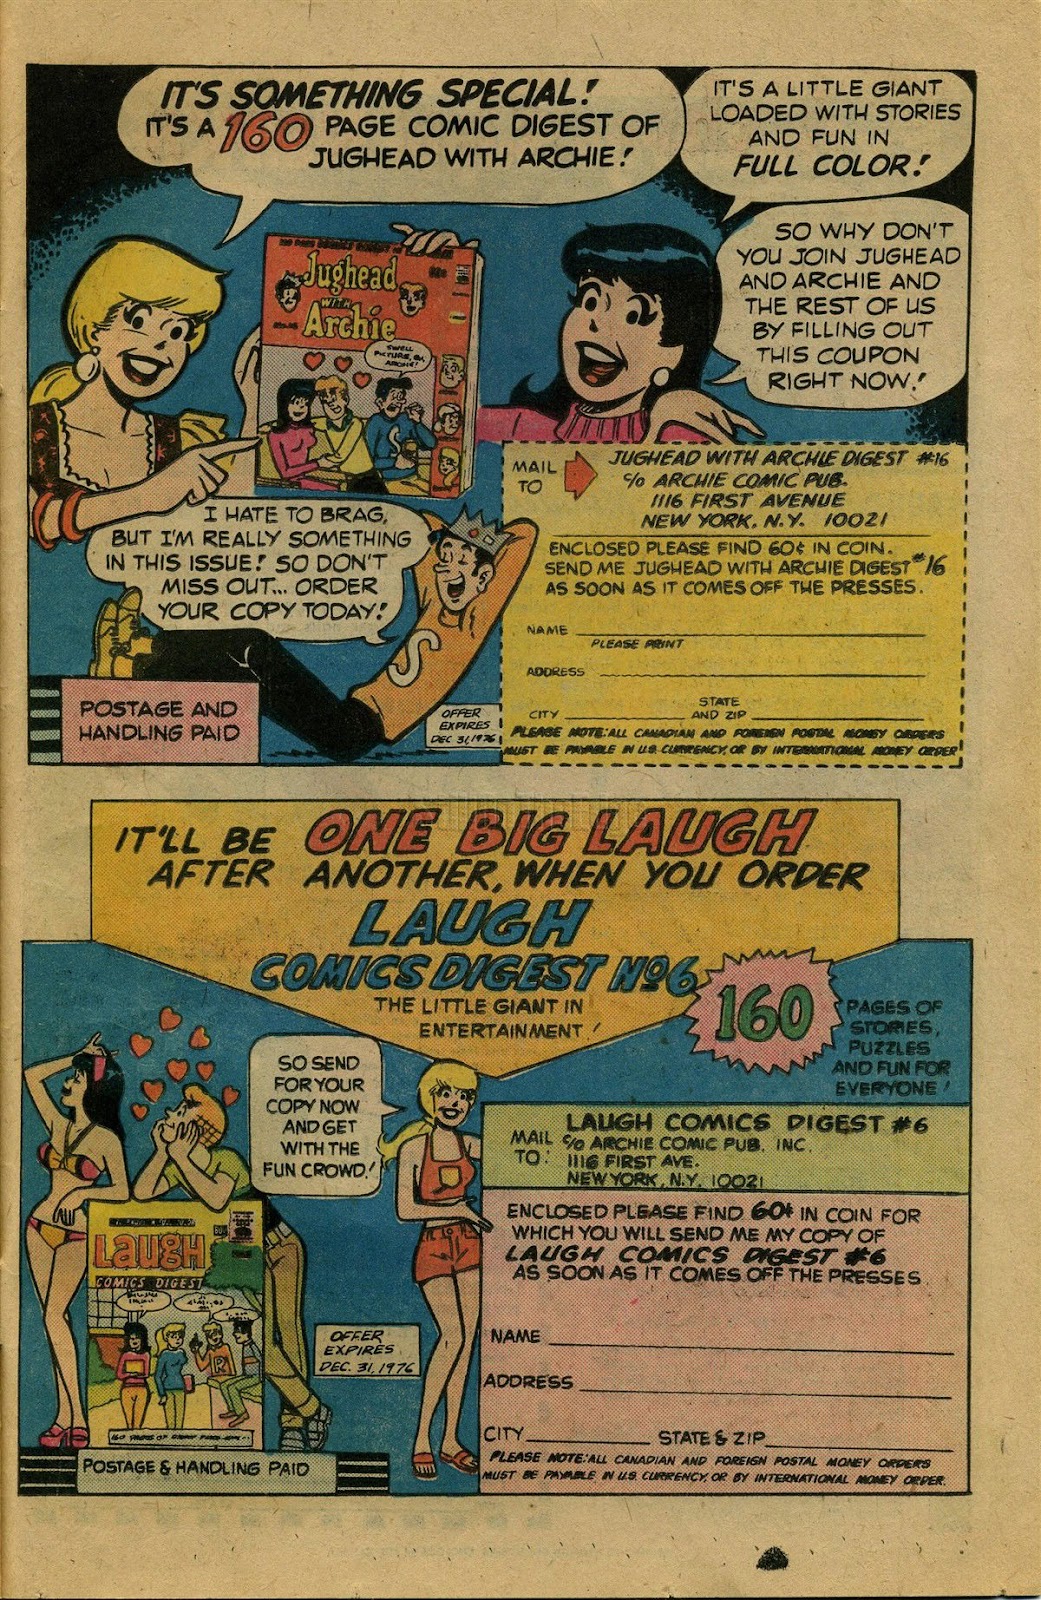 Archie's Joke Book Magazine issue 223 - Page 27